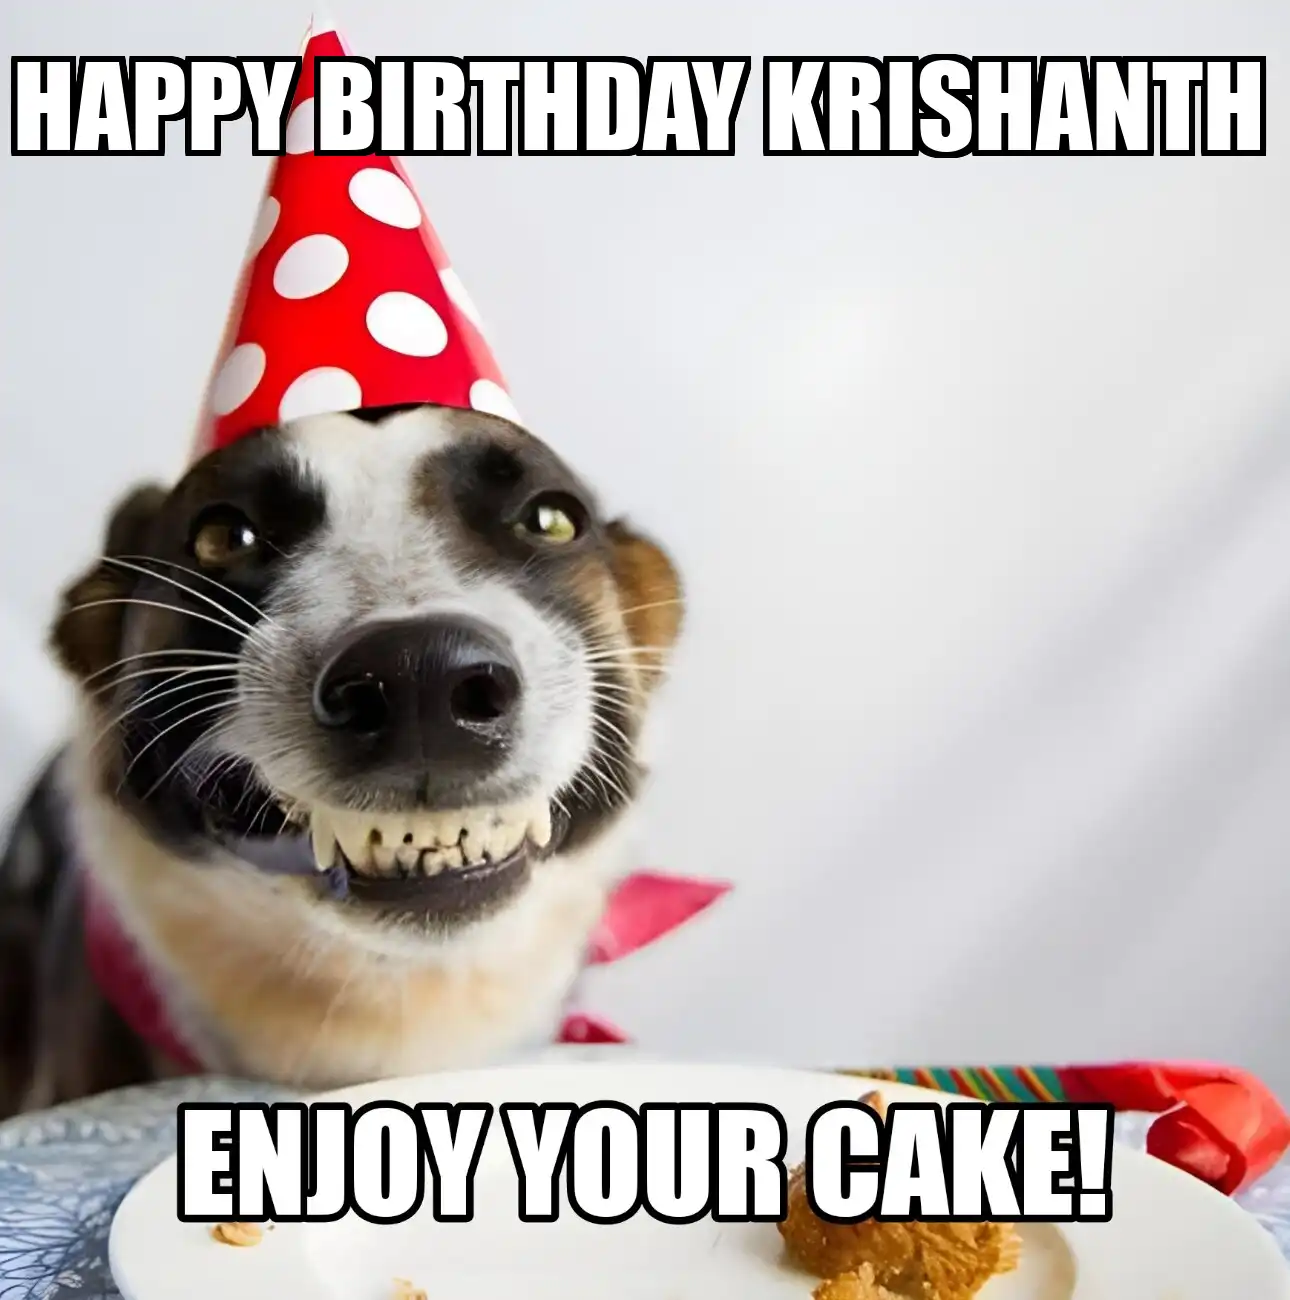 Happy Birthday Krishanth Enjoy Your Cake Dog Meme